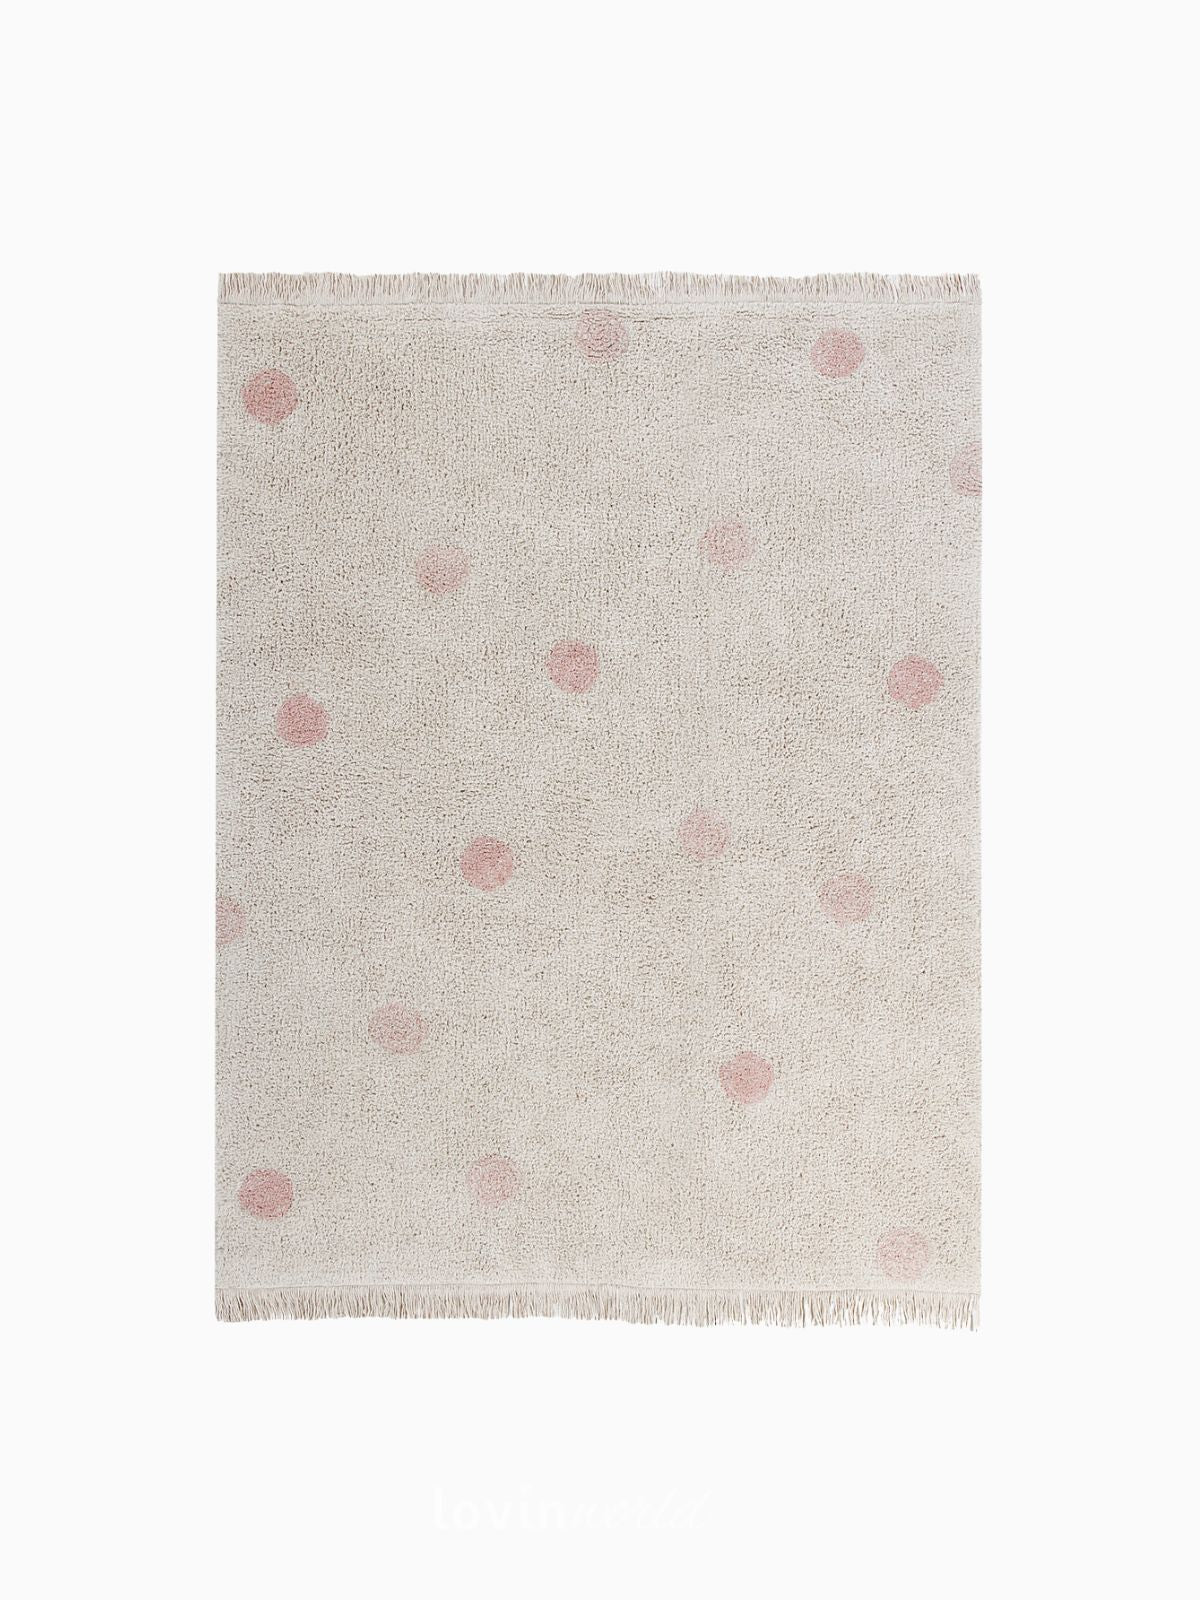 Tappeto in cotone lavabile Hippy Dots Rosa Vintage, 120x160 cm.-1